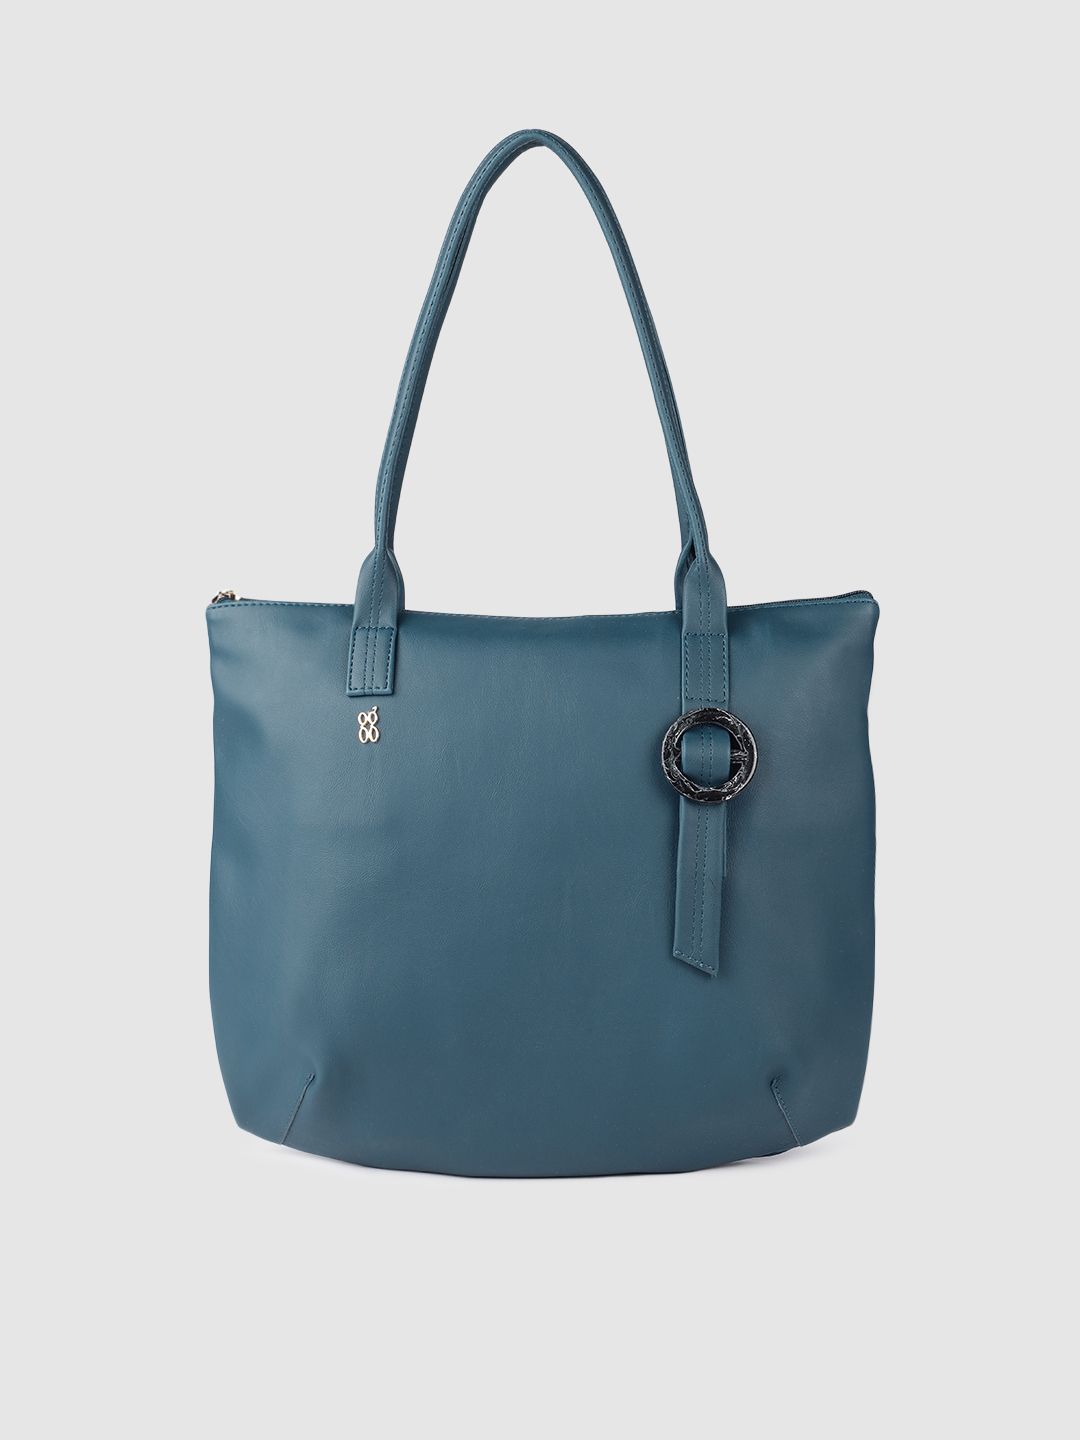 Baggit Teal Blue Solid Structured Shoulder Bag Price in India